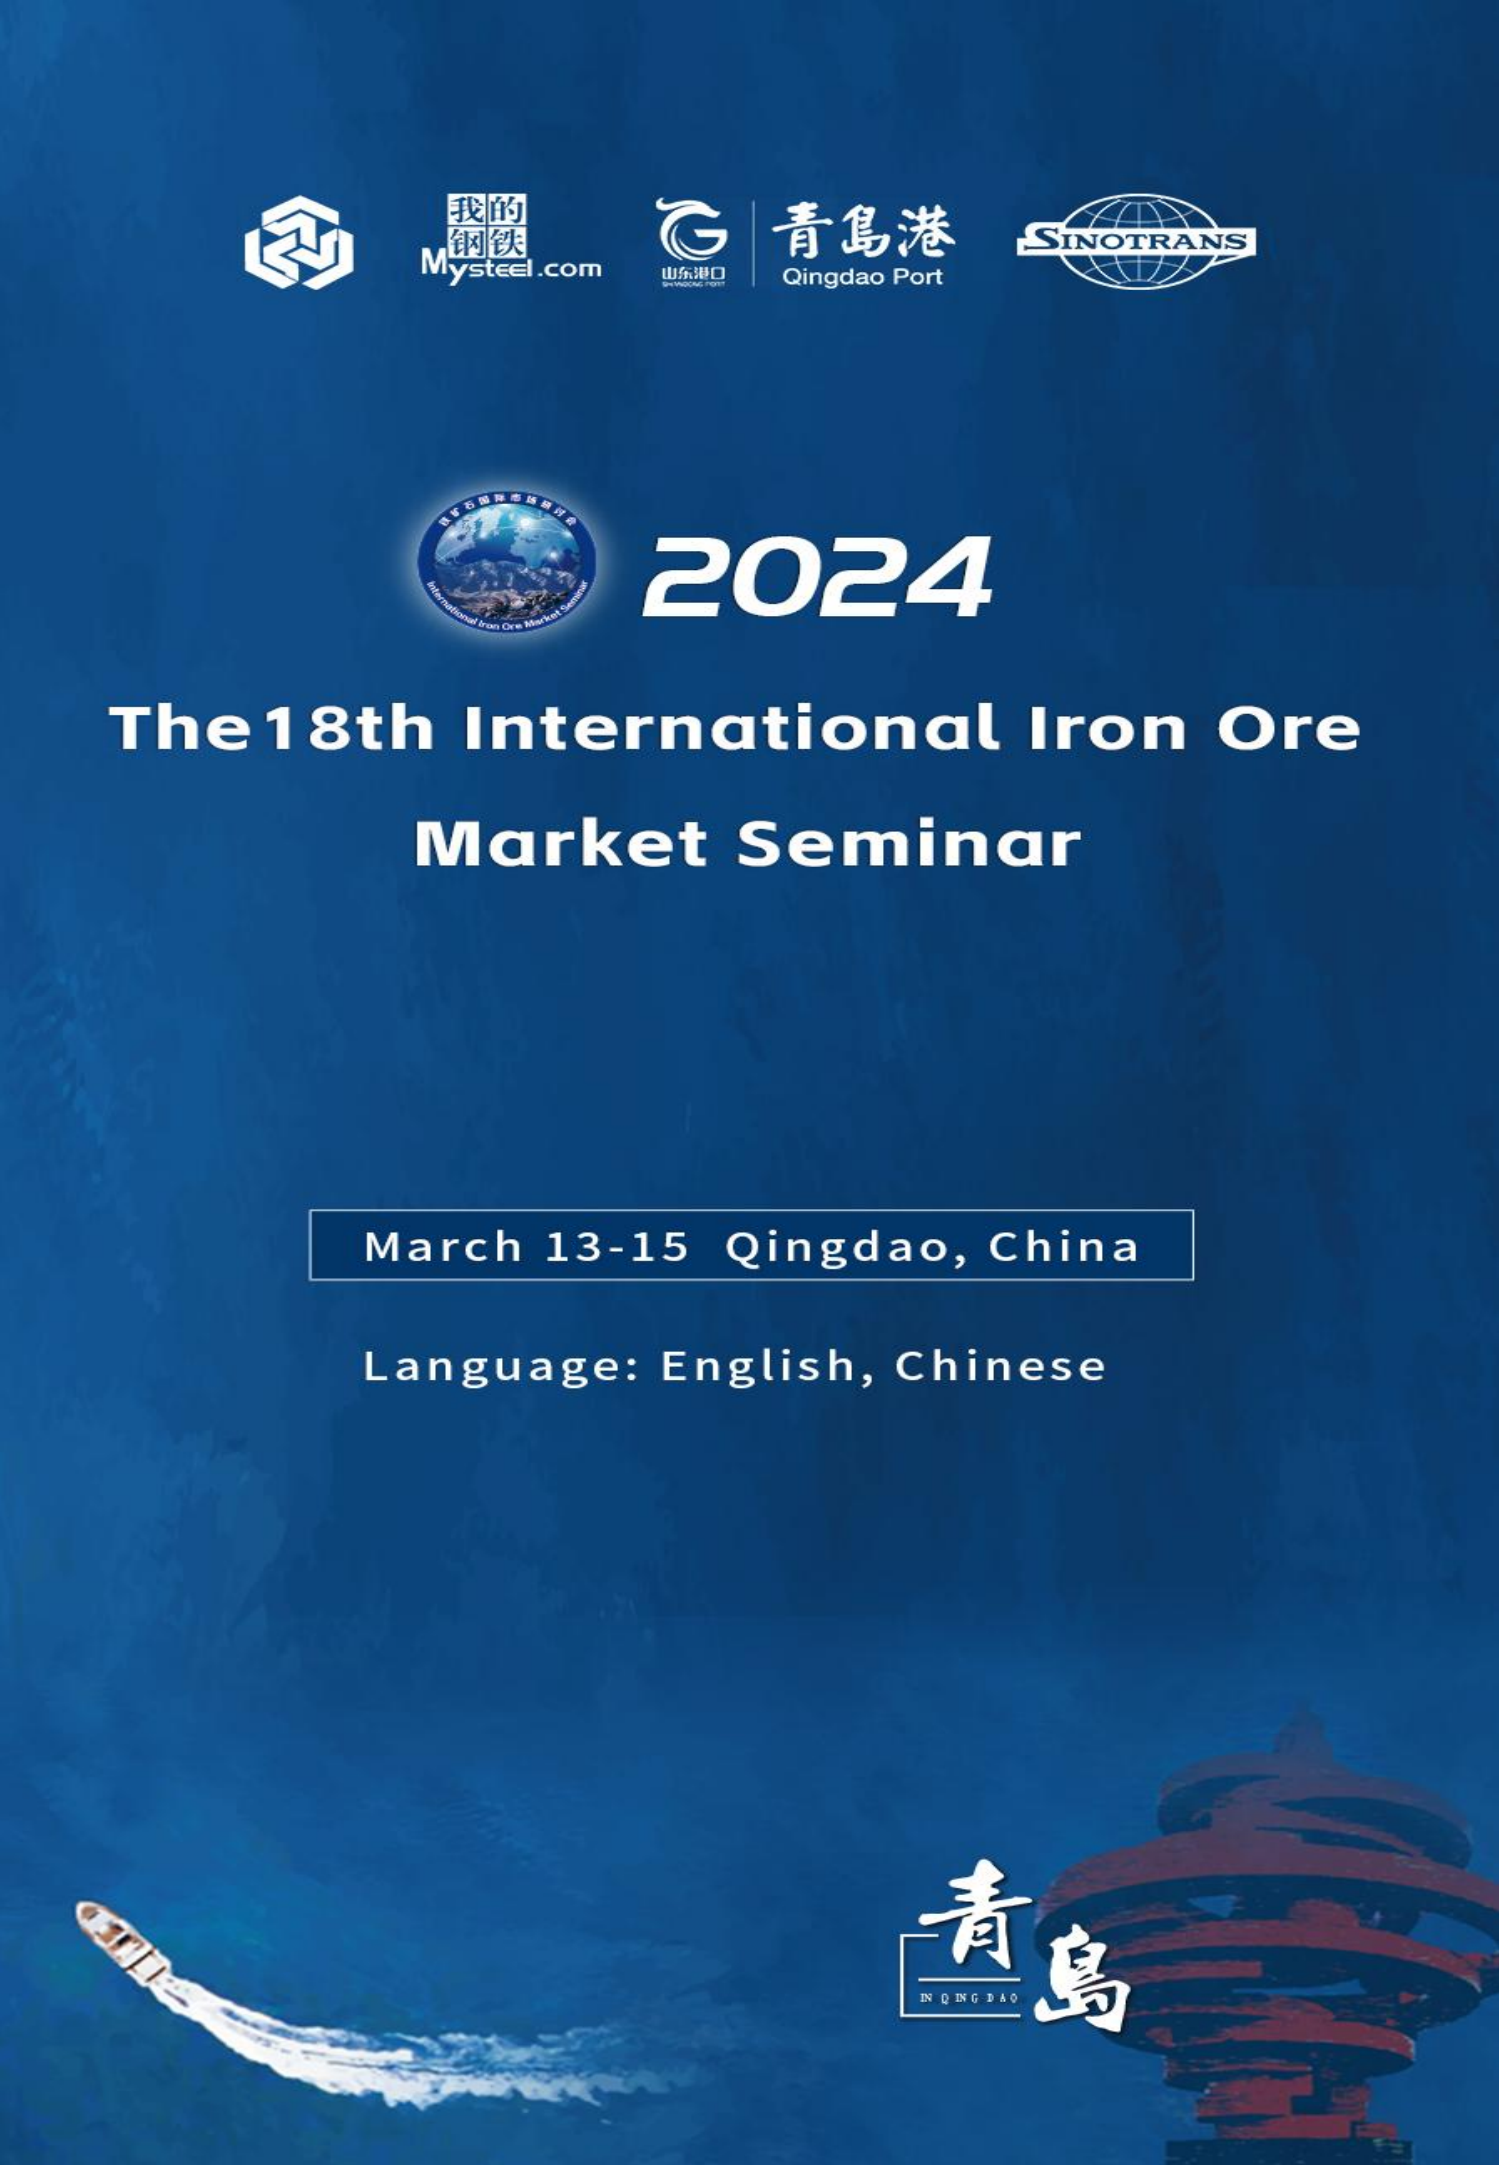 The 18th International Iron Ore Market Seminar